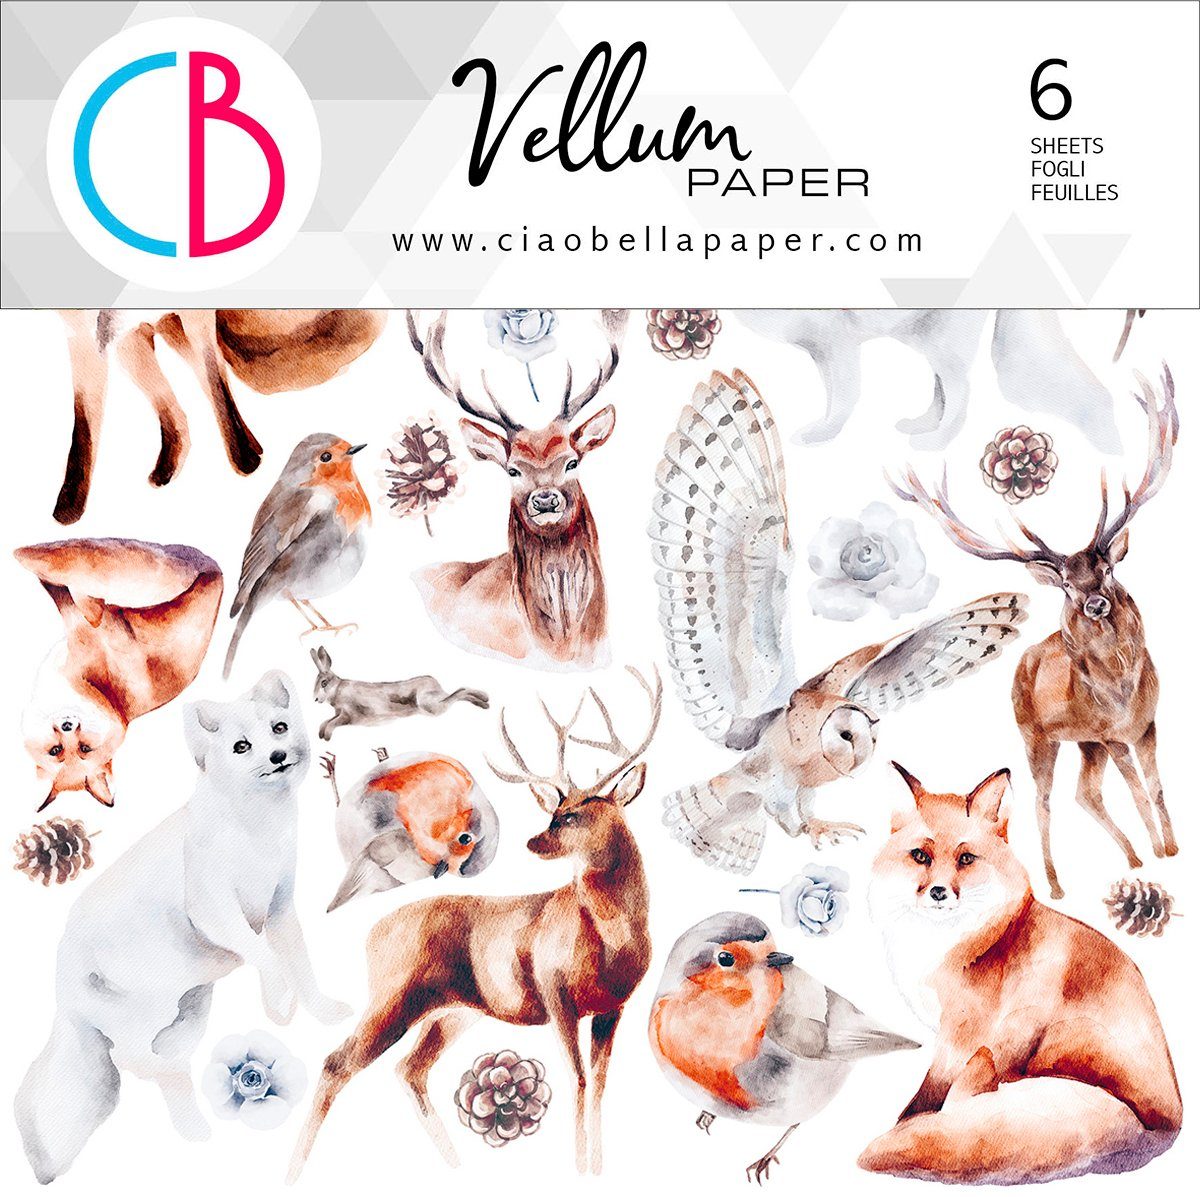 Ciao Bella Transparentpapier Vellum Paper cm Journey, Winter Blatt 15 cm x 15 6